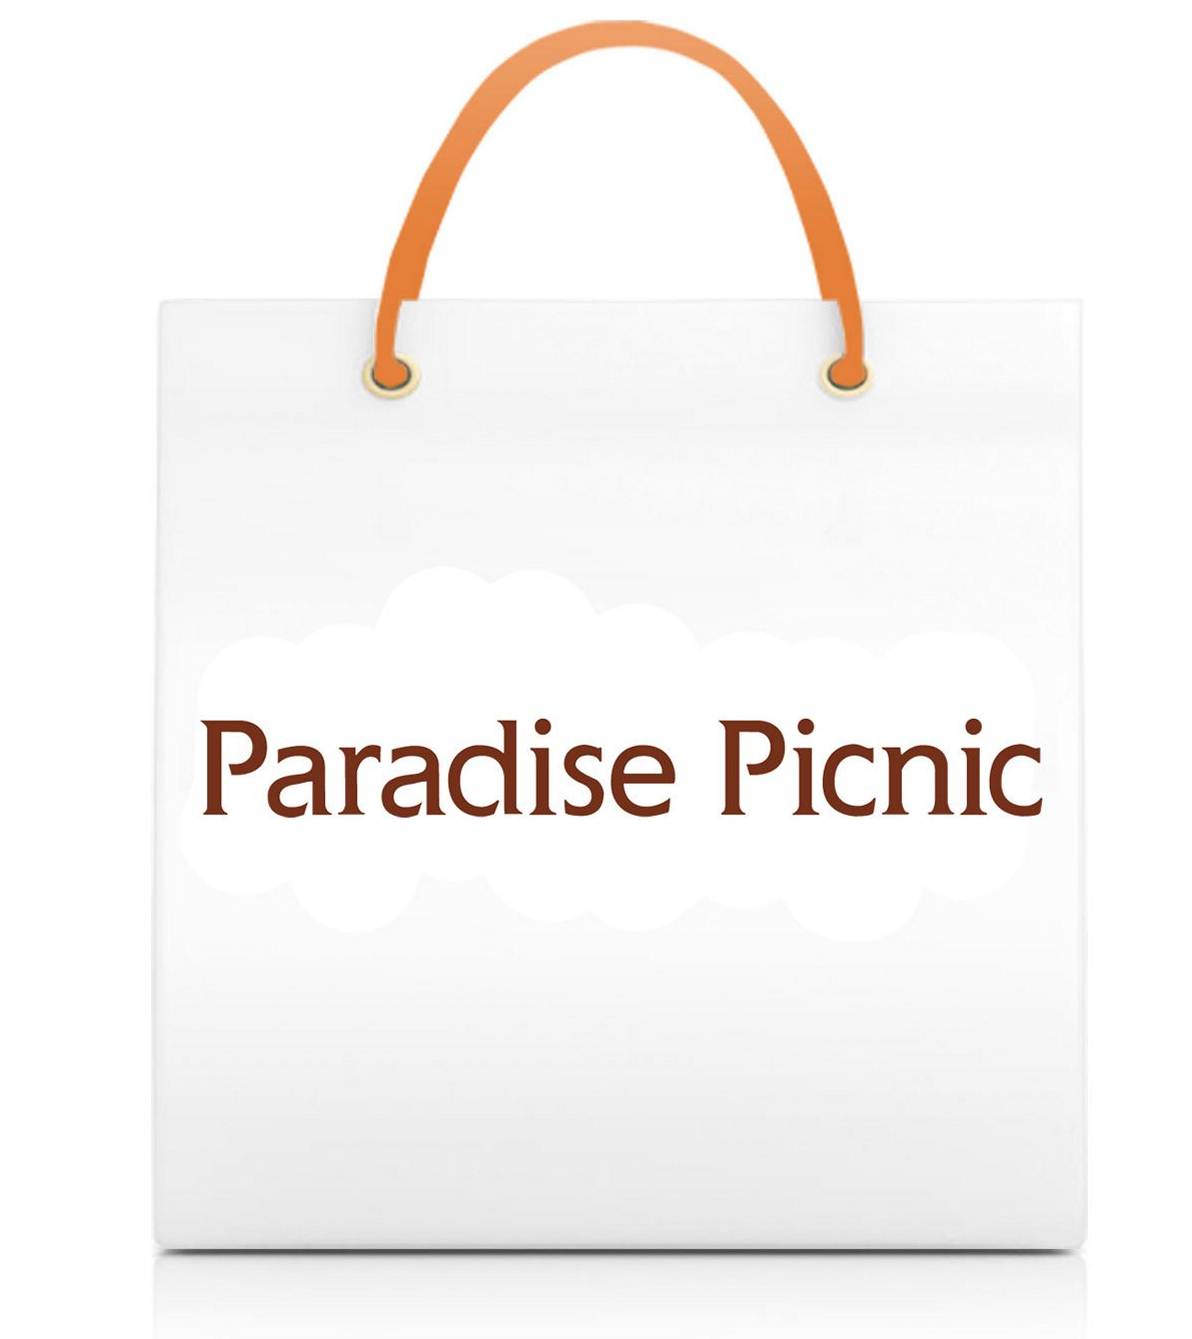 良書網 Paradise Picnic 2013 福袋 (總值55,000~60,000日元, 共7~8件) 出版社: HappyBag Code/ISBN: 2013PP